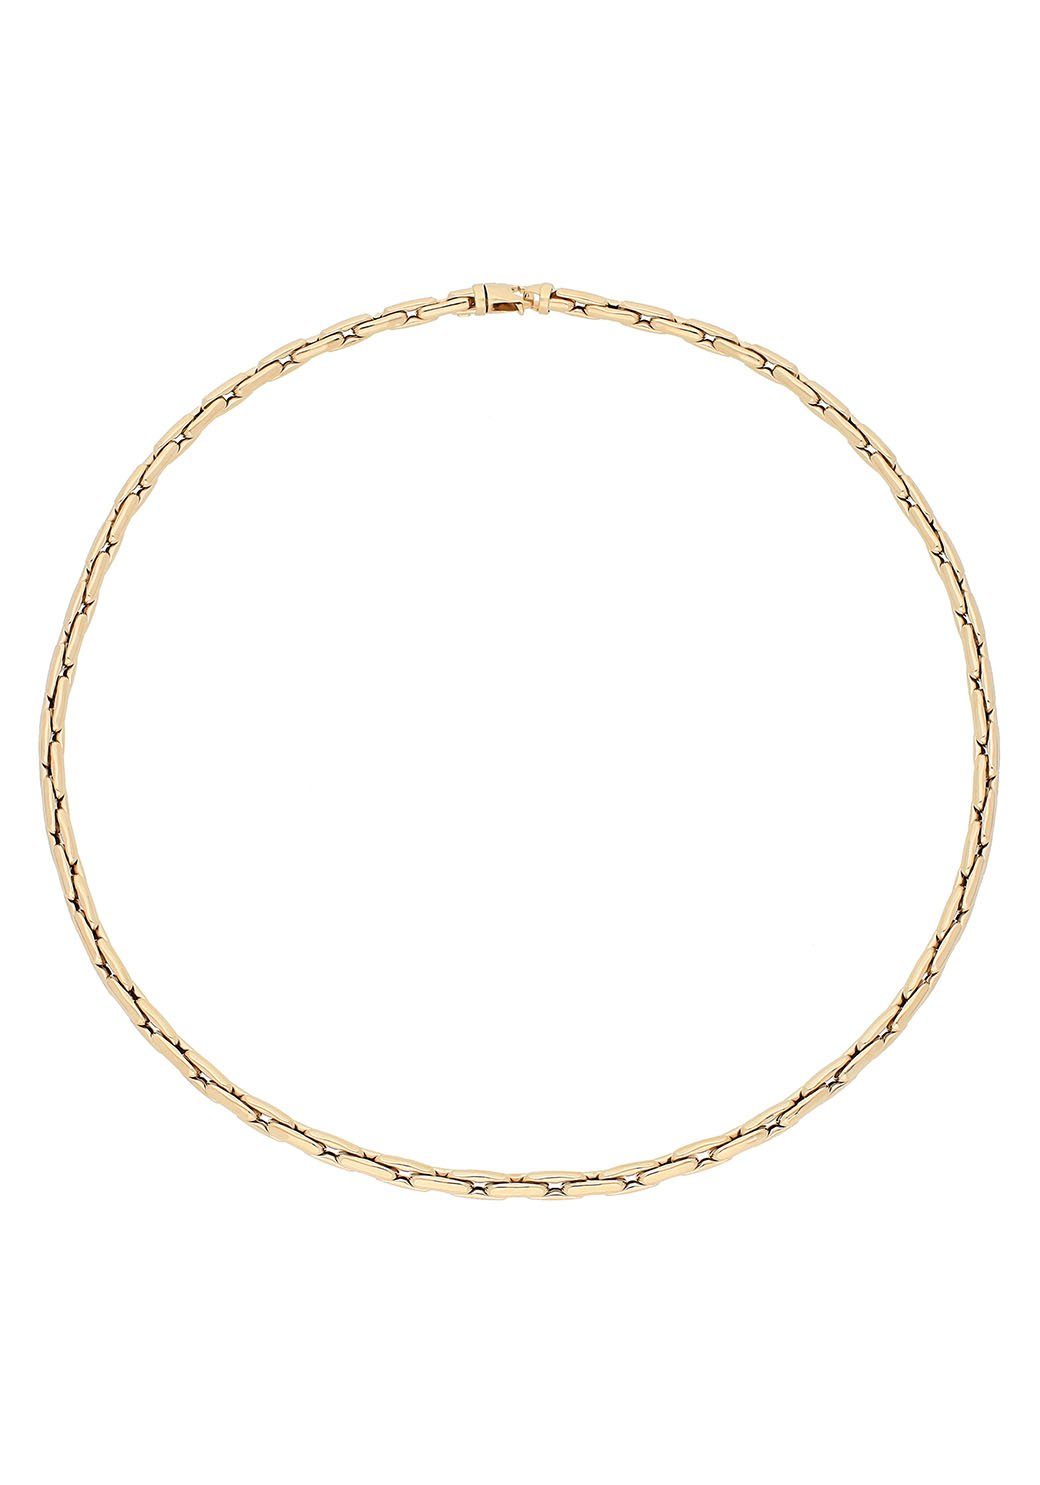 Firetti Goldkette Schmuck Geschenk Gold 585, 5 mm breit, zu Kleid, Shirt,  Jeans, Sneaker! Anlass Geburtstag Weihnachten